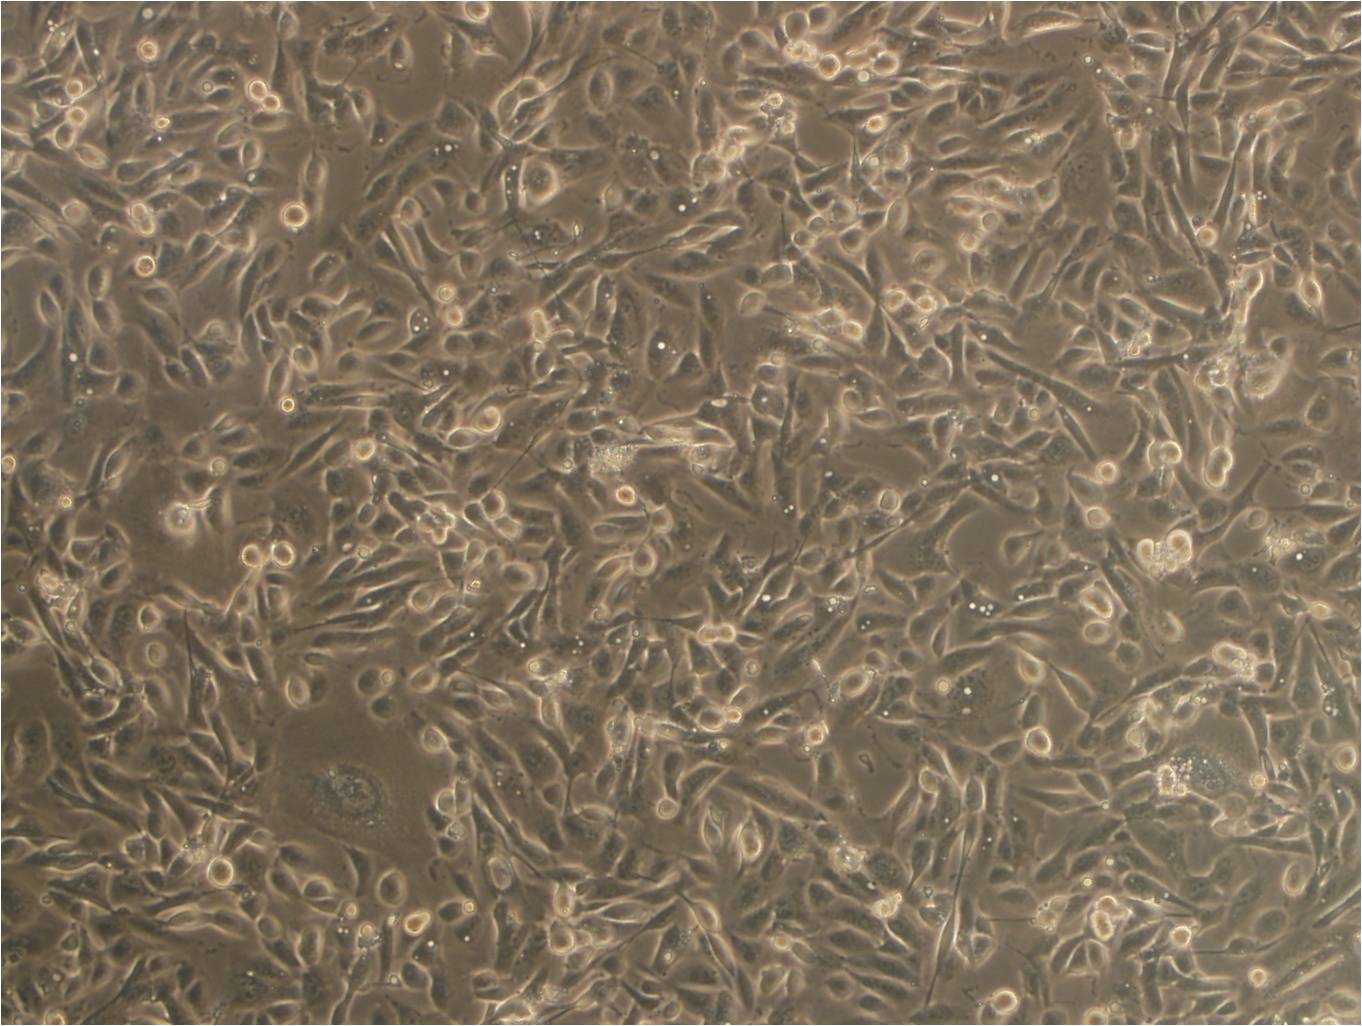 NSC-34 Cell:鼠神经元细胞系,NSC-34 Cell